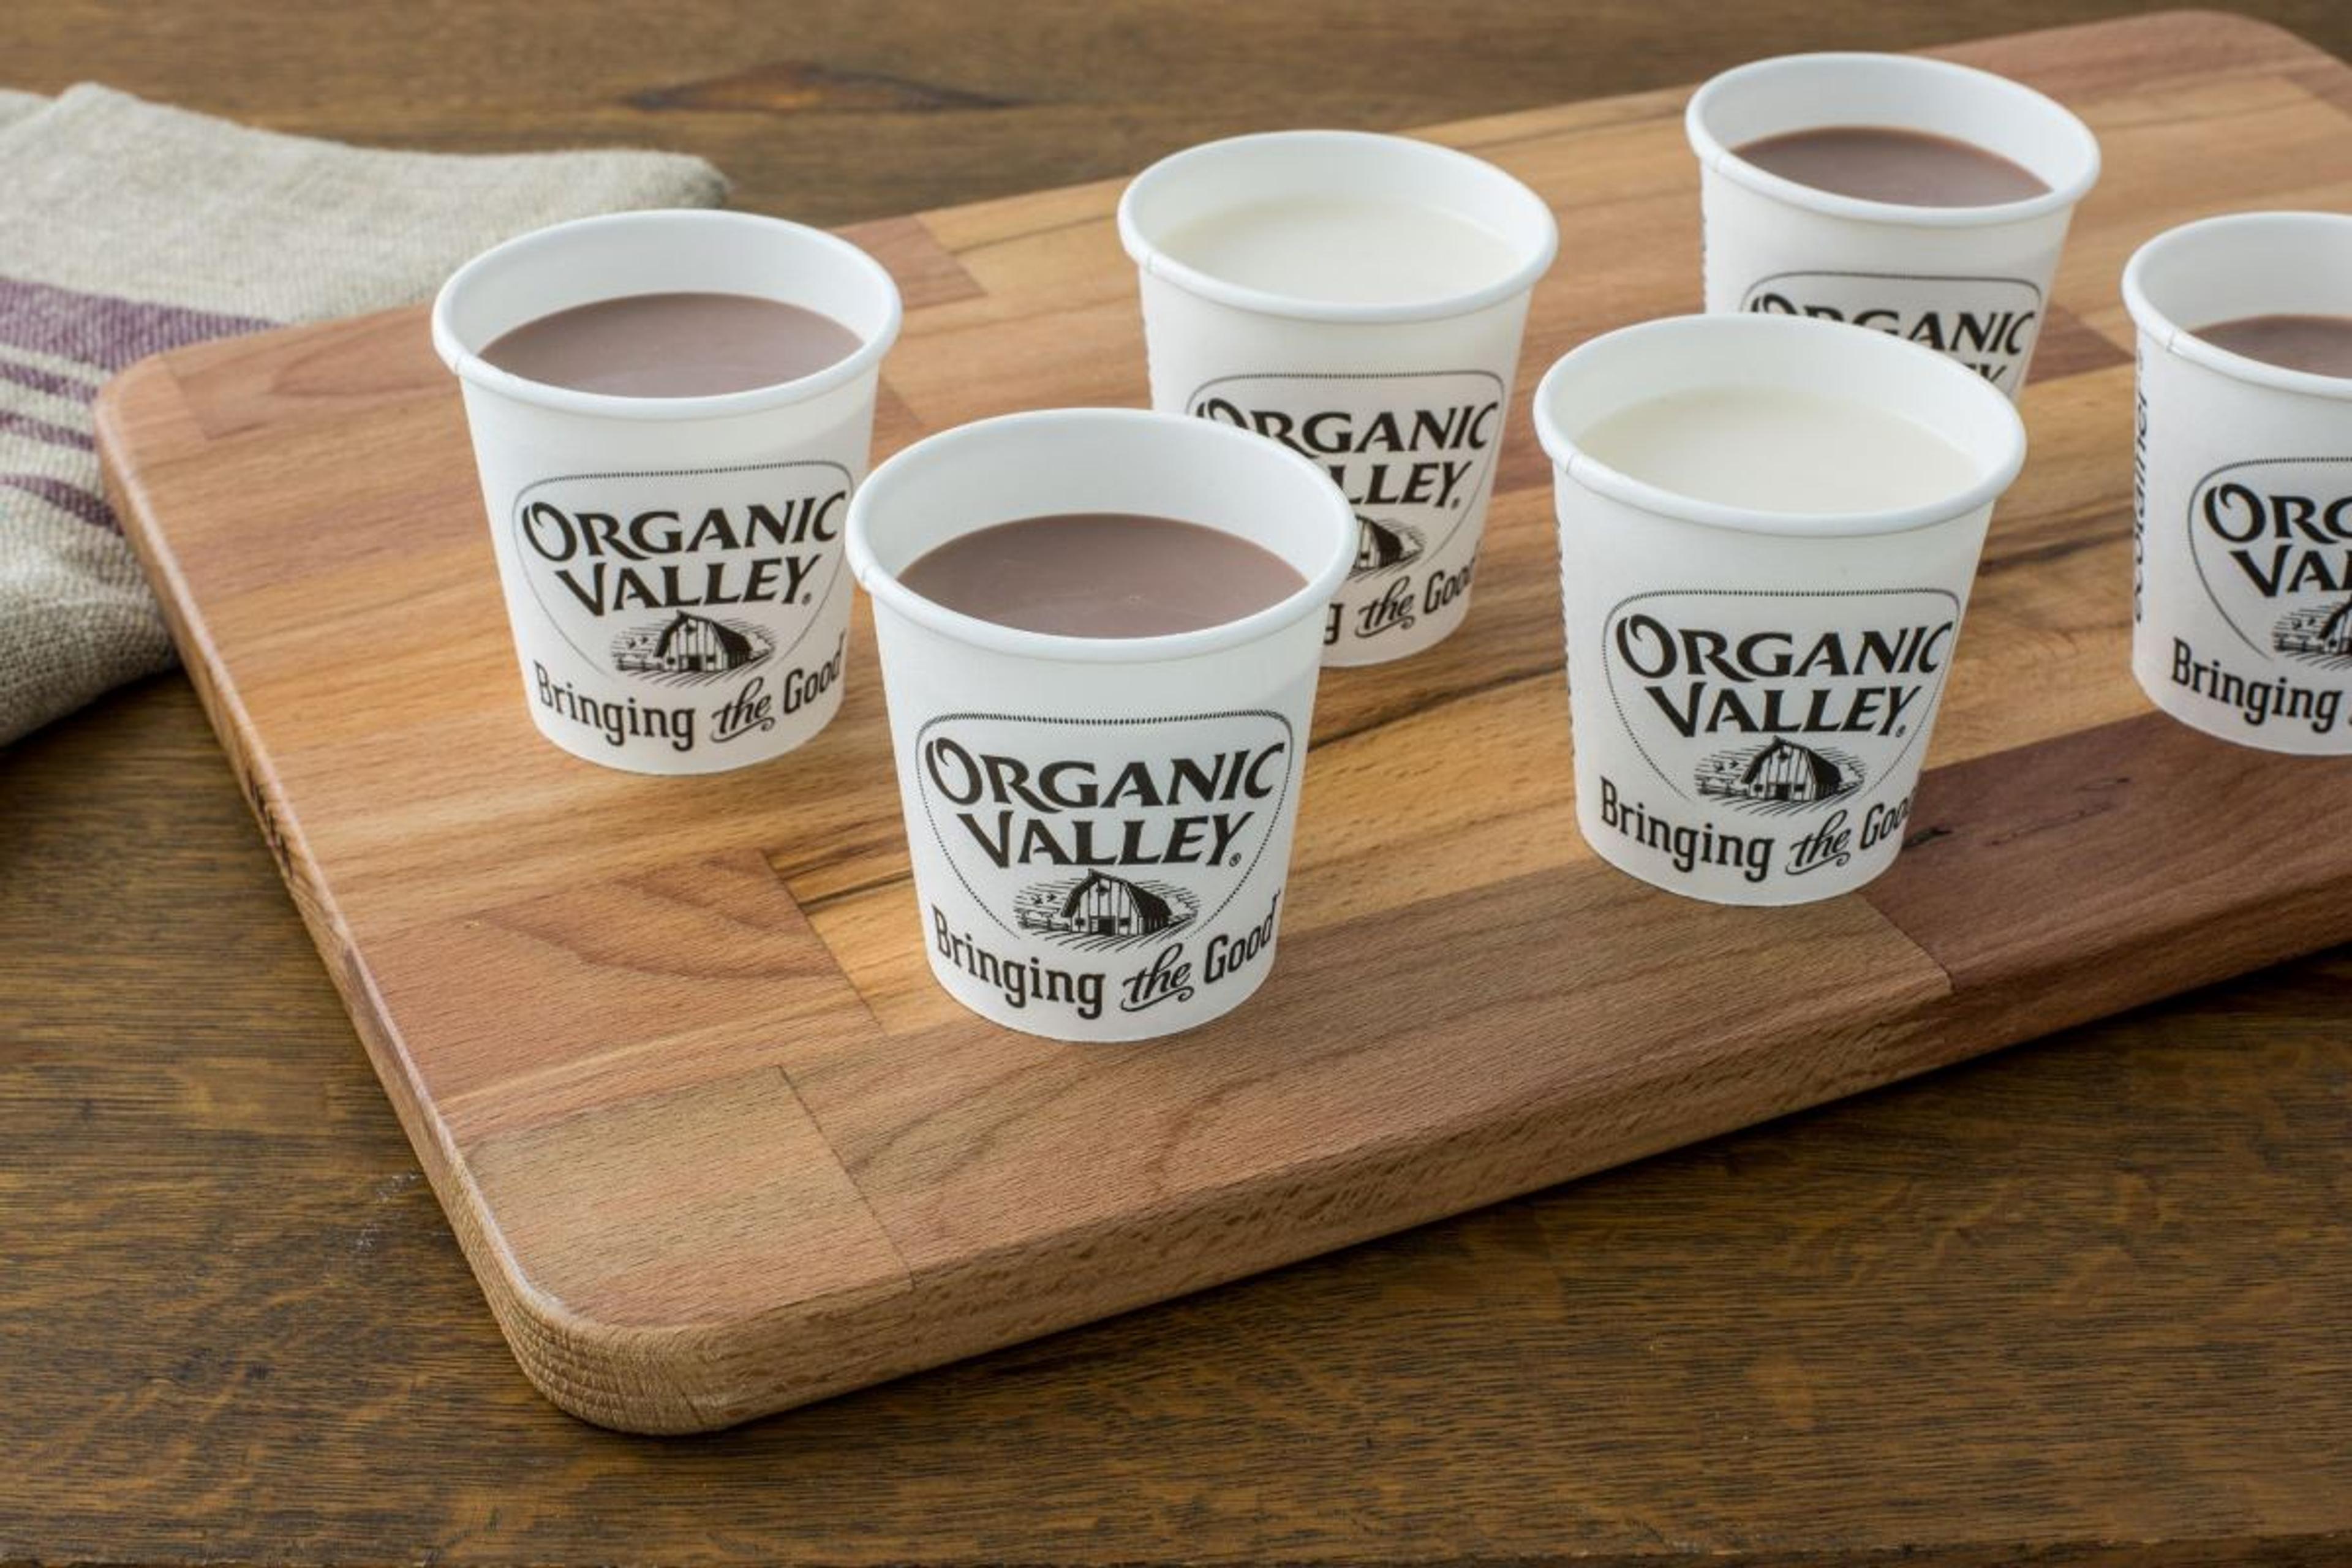 Organic Valley Chocolate Milk uses fair trade ingredients. 